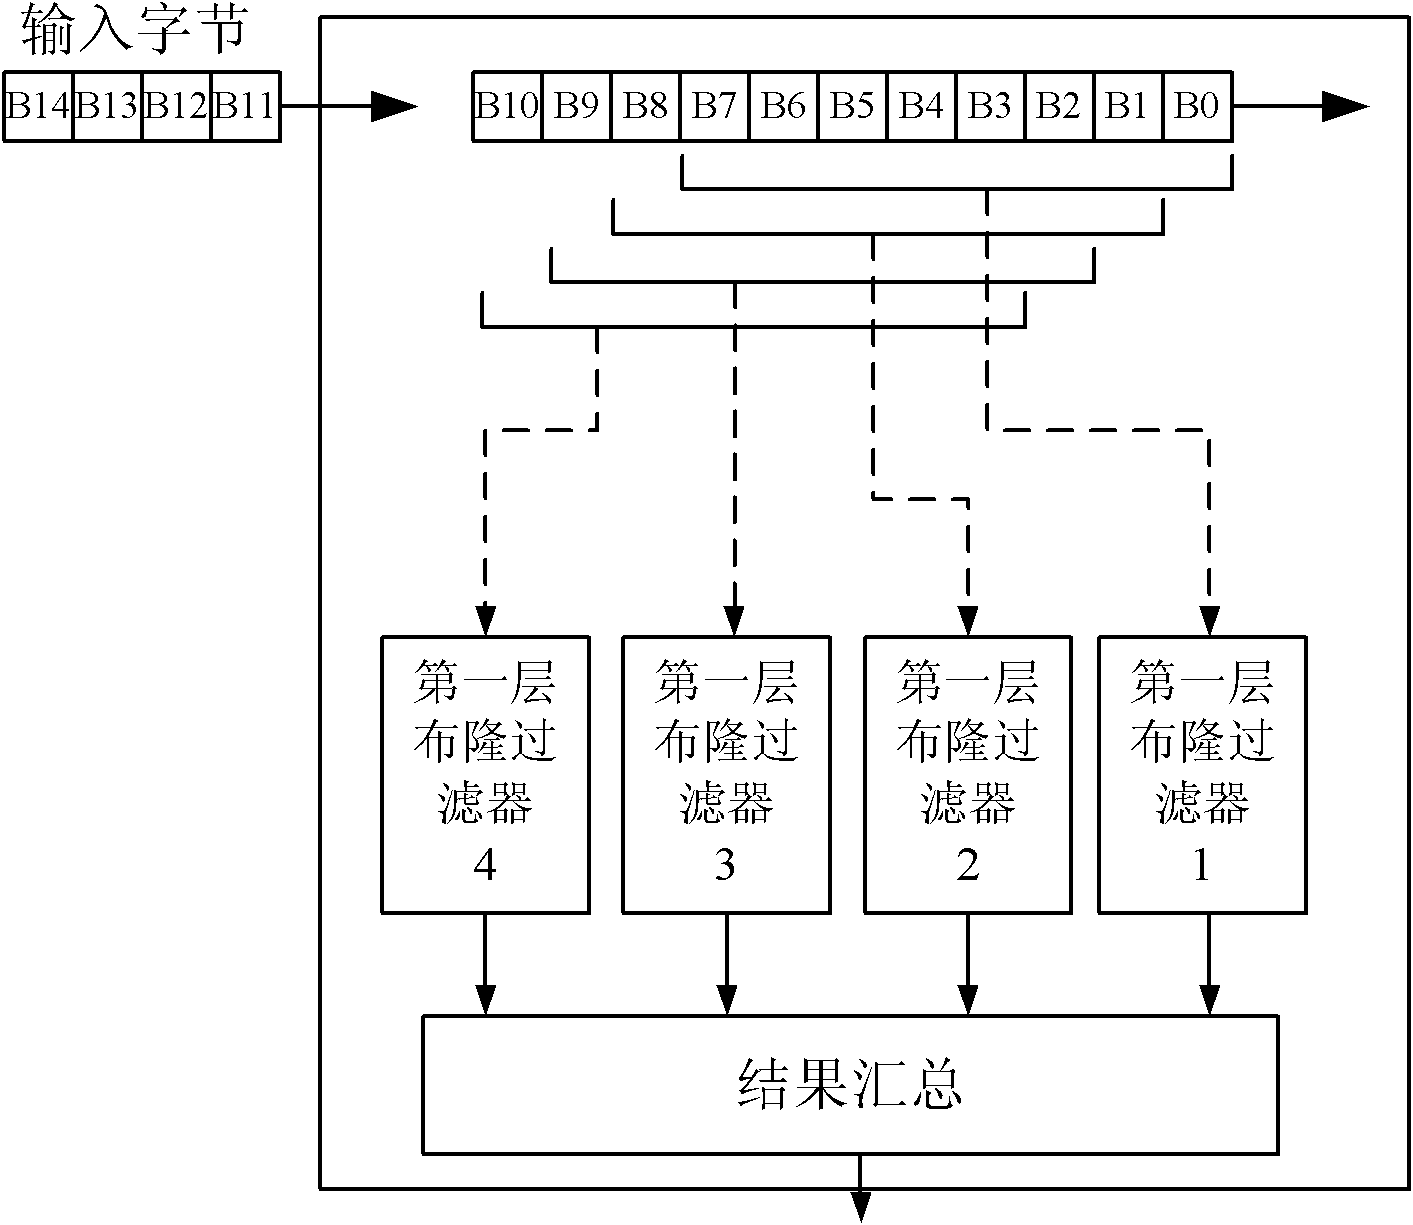 Method for detecting deep packet under large flow